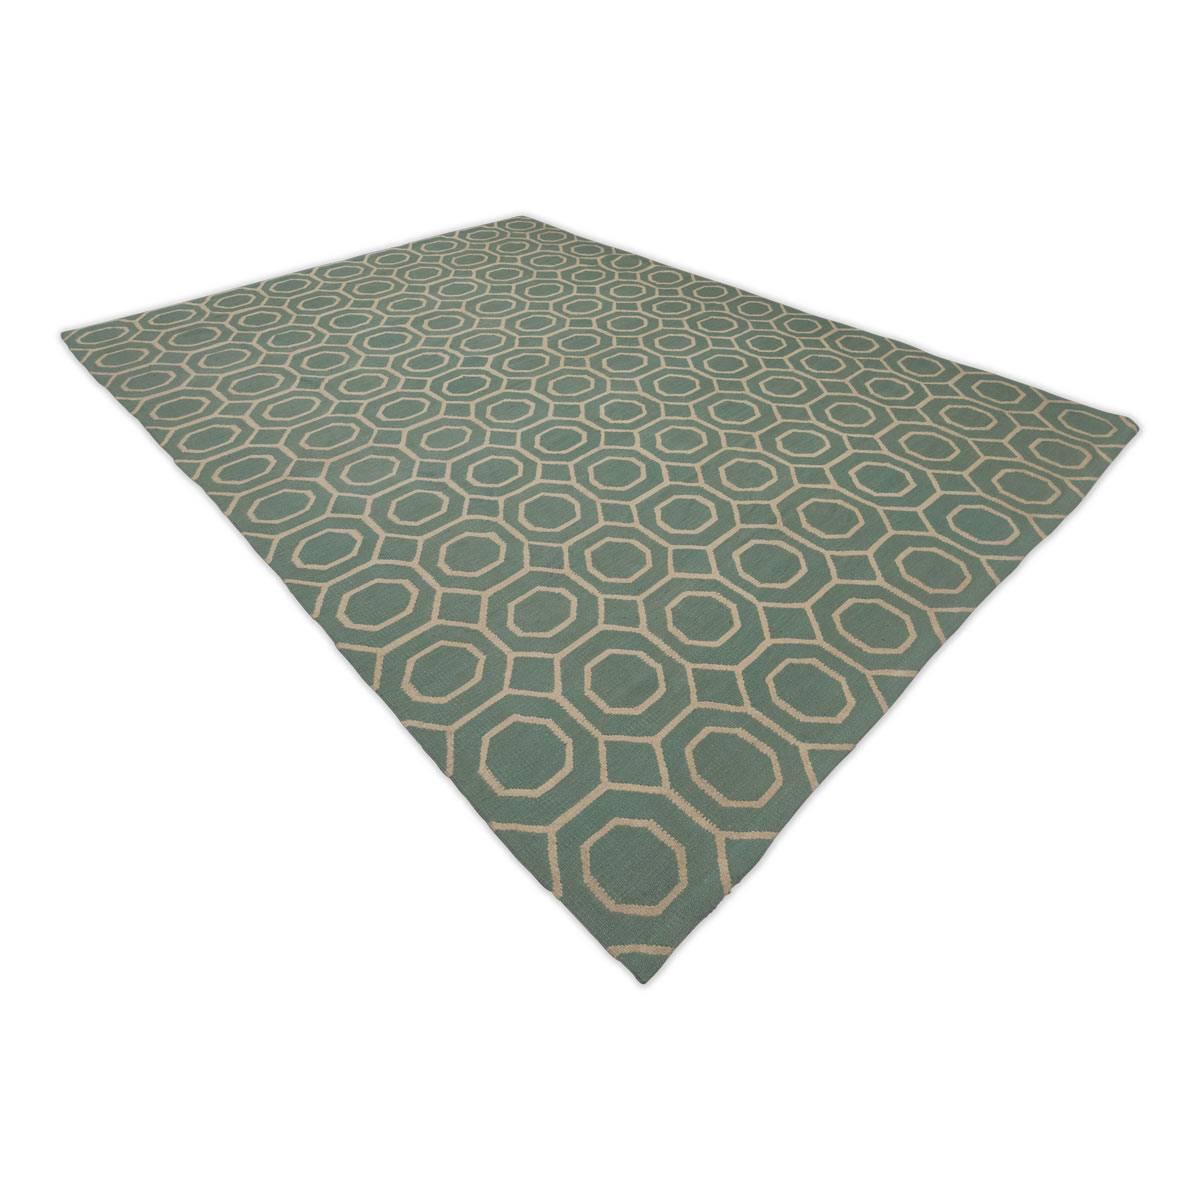 Wool Flatweave Rug with Geometric Desig over Green Background.